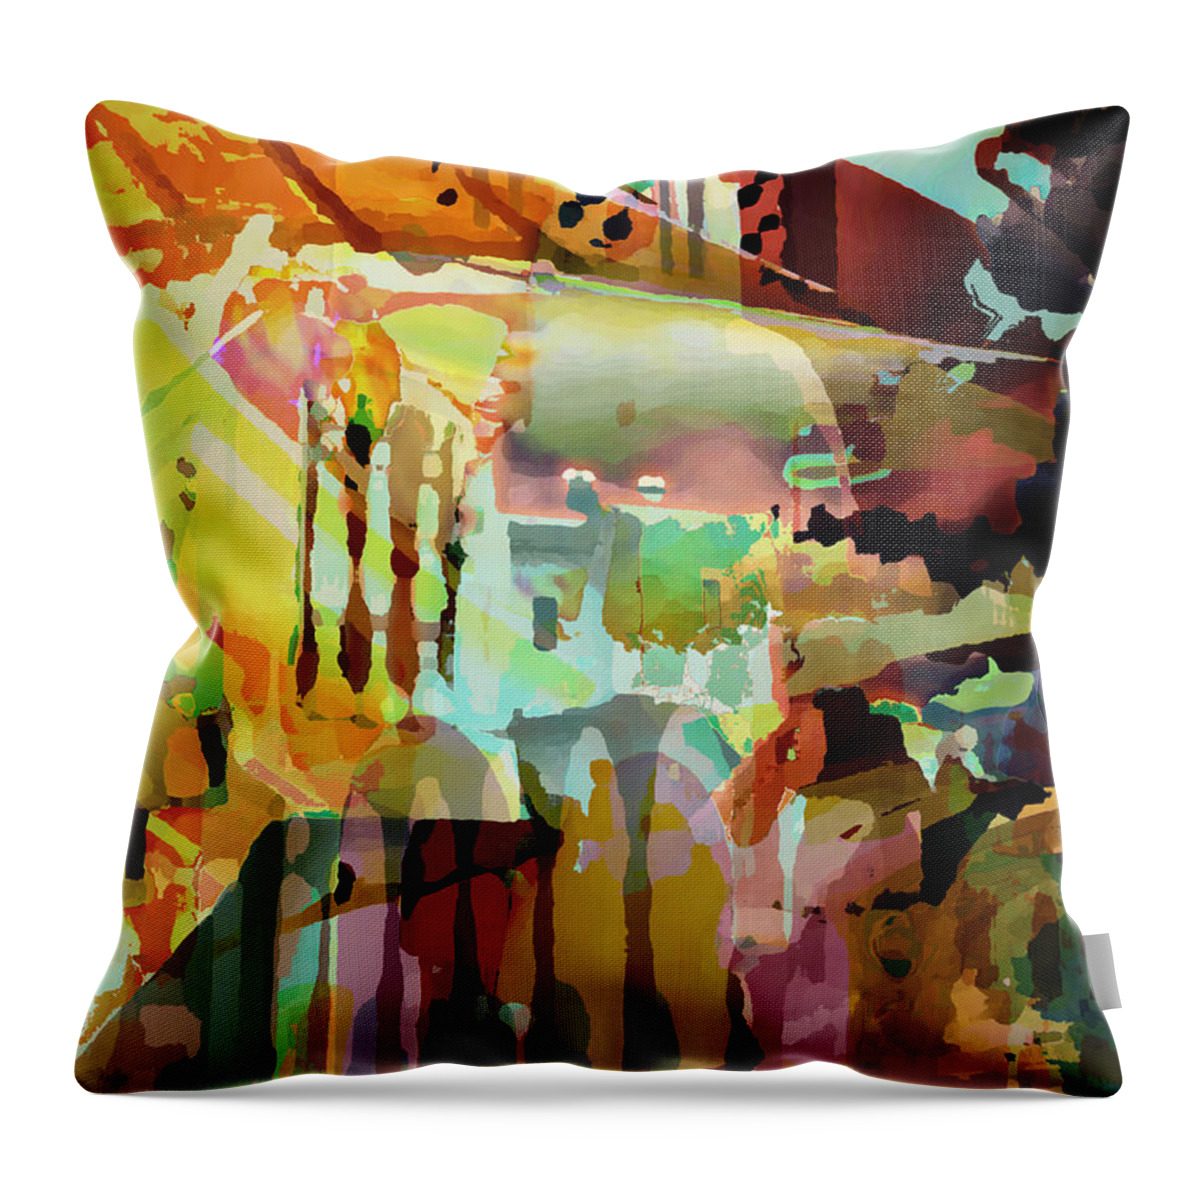 Marrakech Throw Pillow featuring the digital art Marrakesh Arches by Sarah Vernon